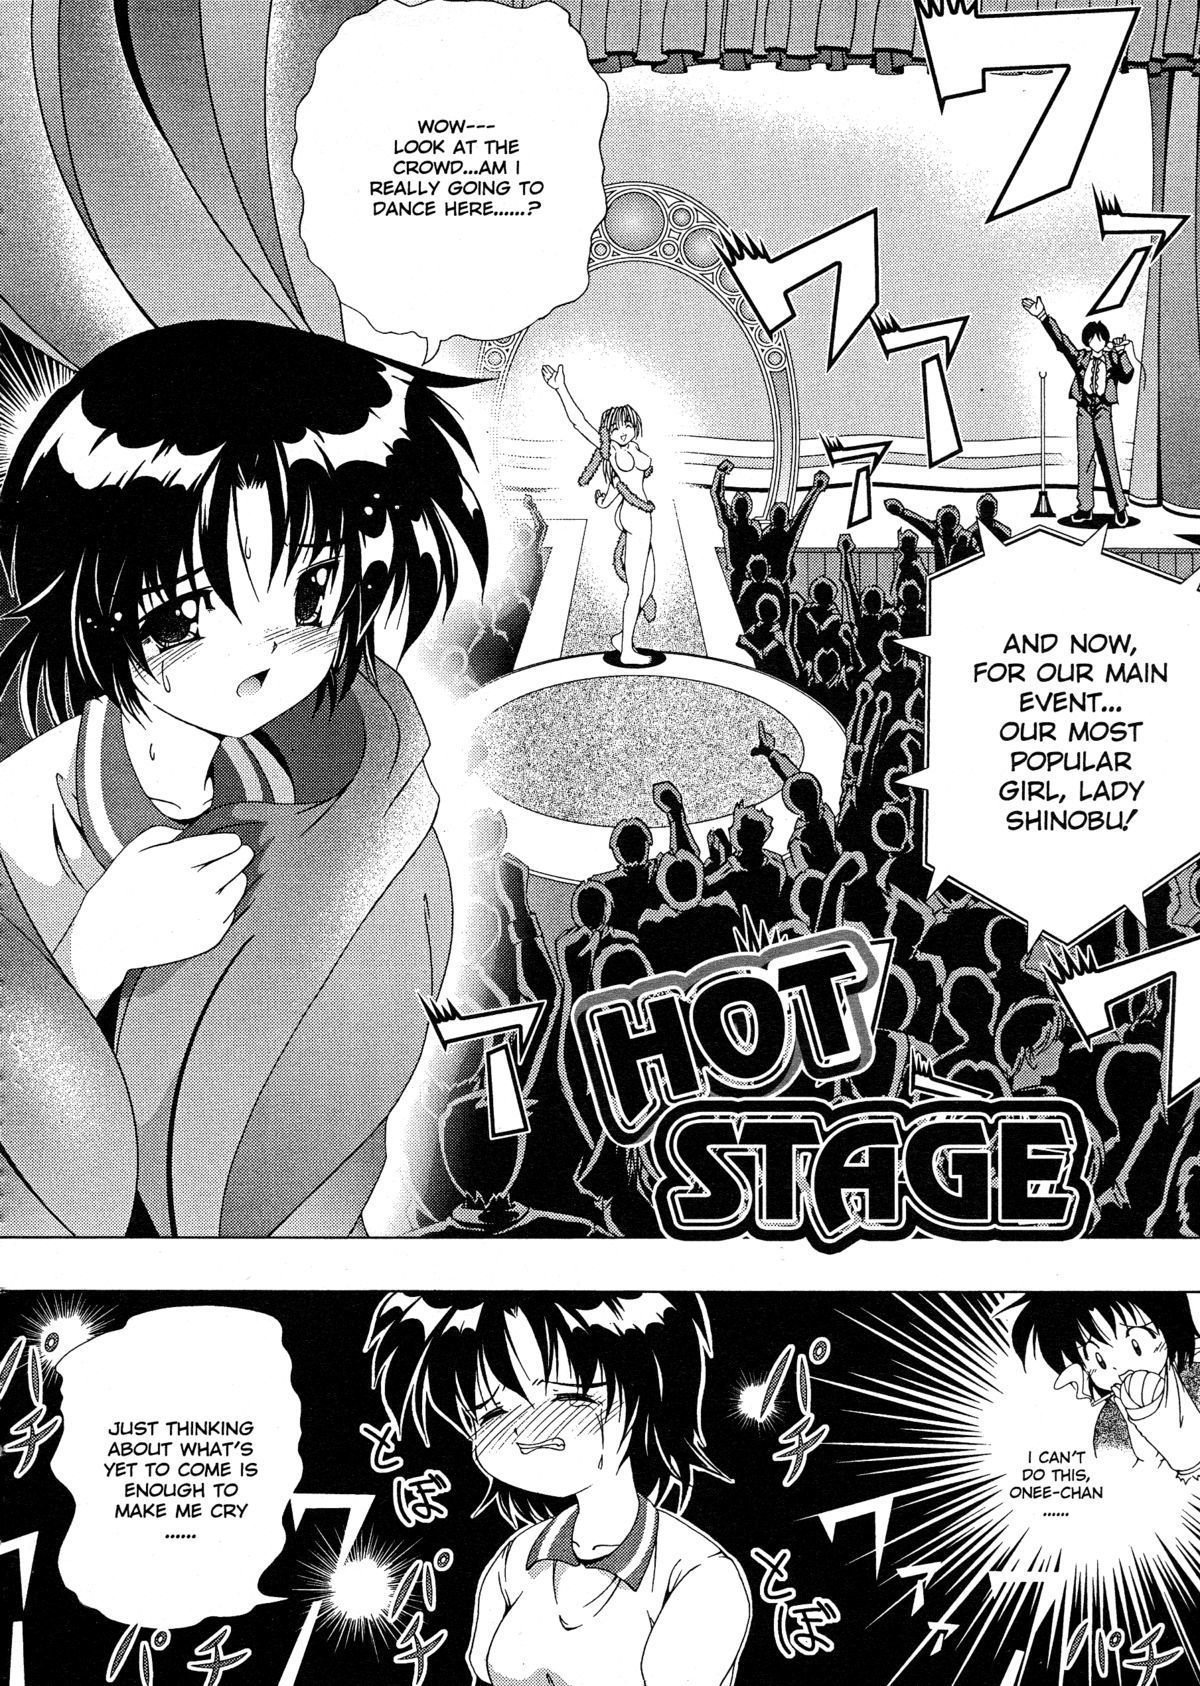 Flashbang!Hi-res 54 hentai manga